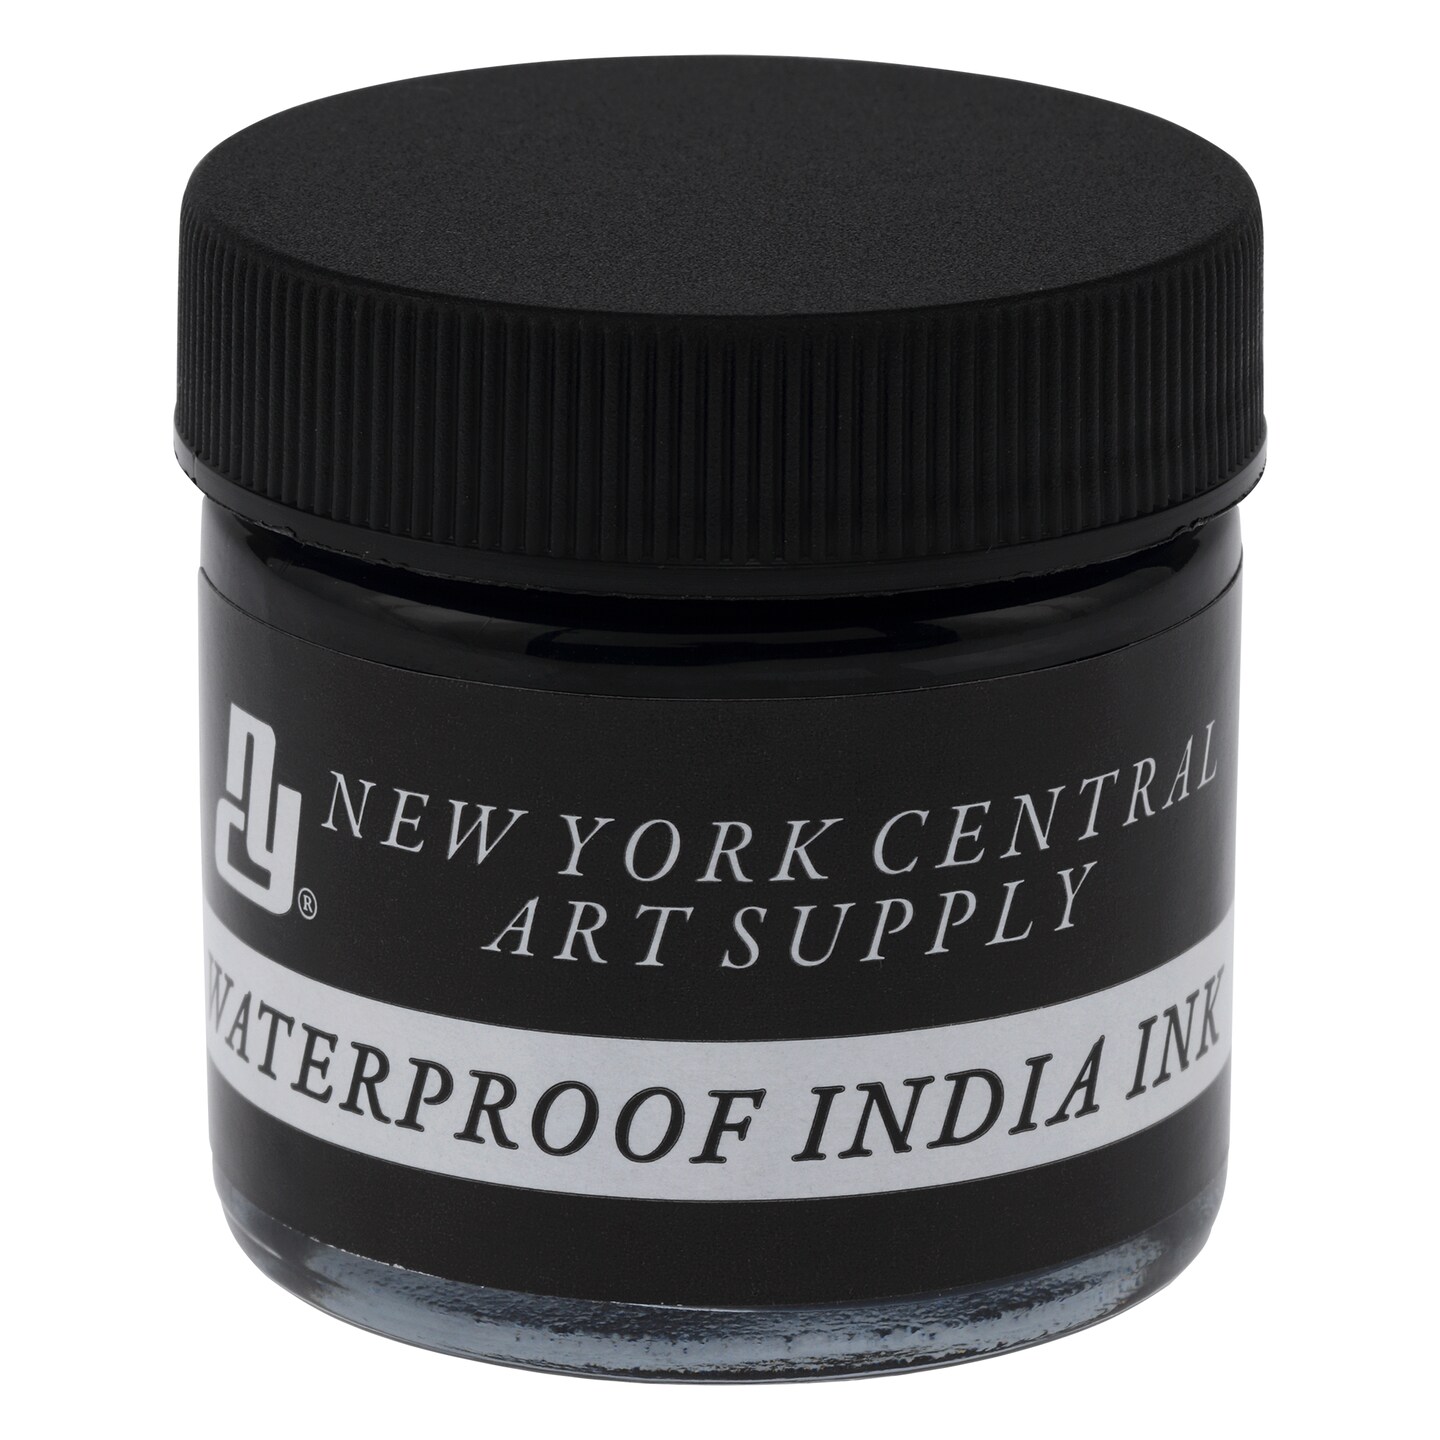 New York Central Art Supply